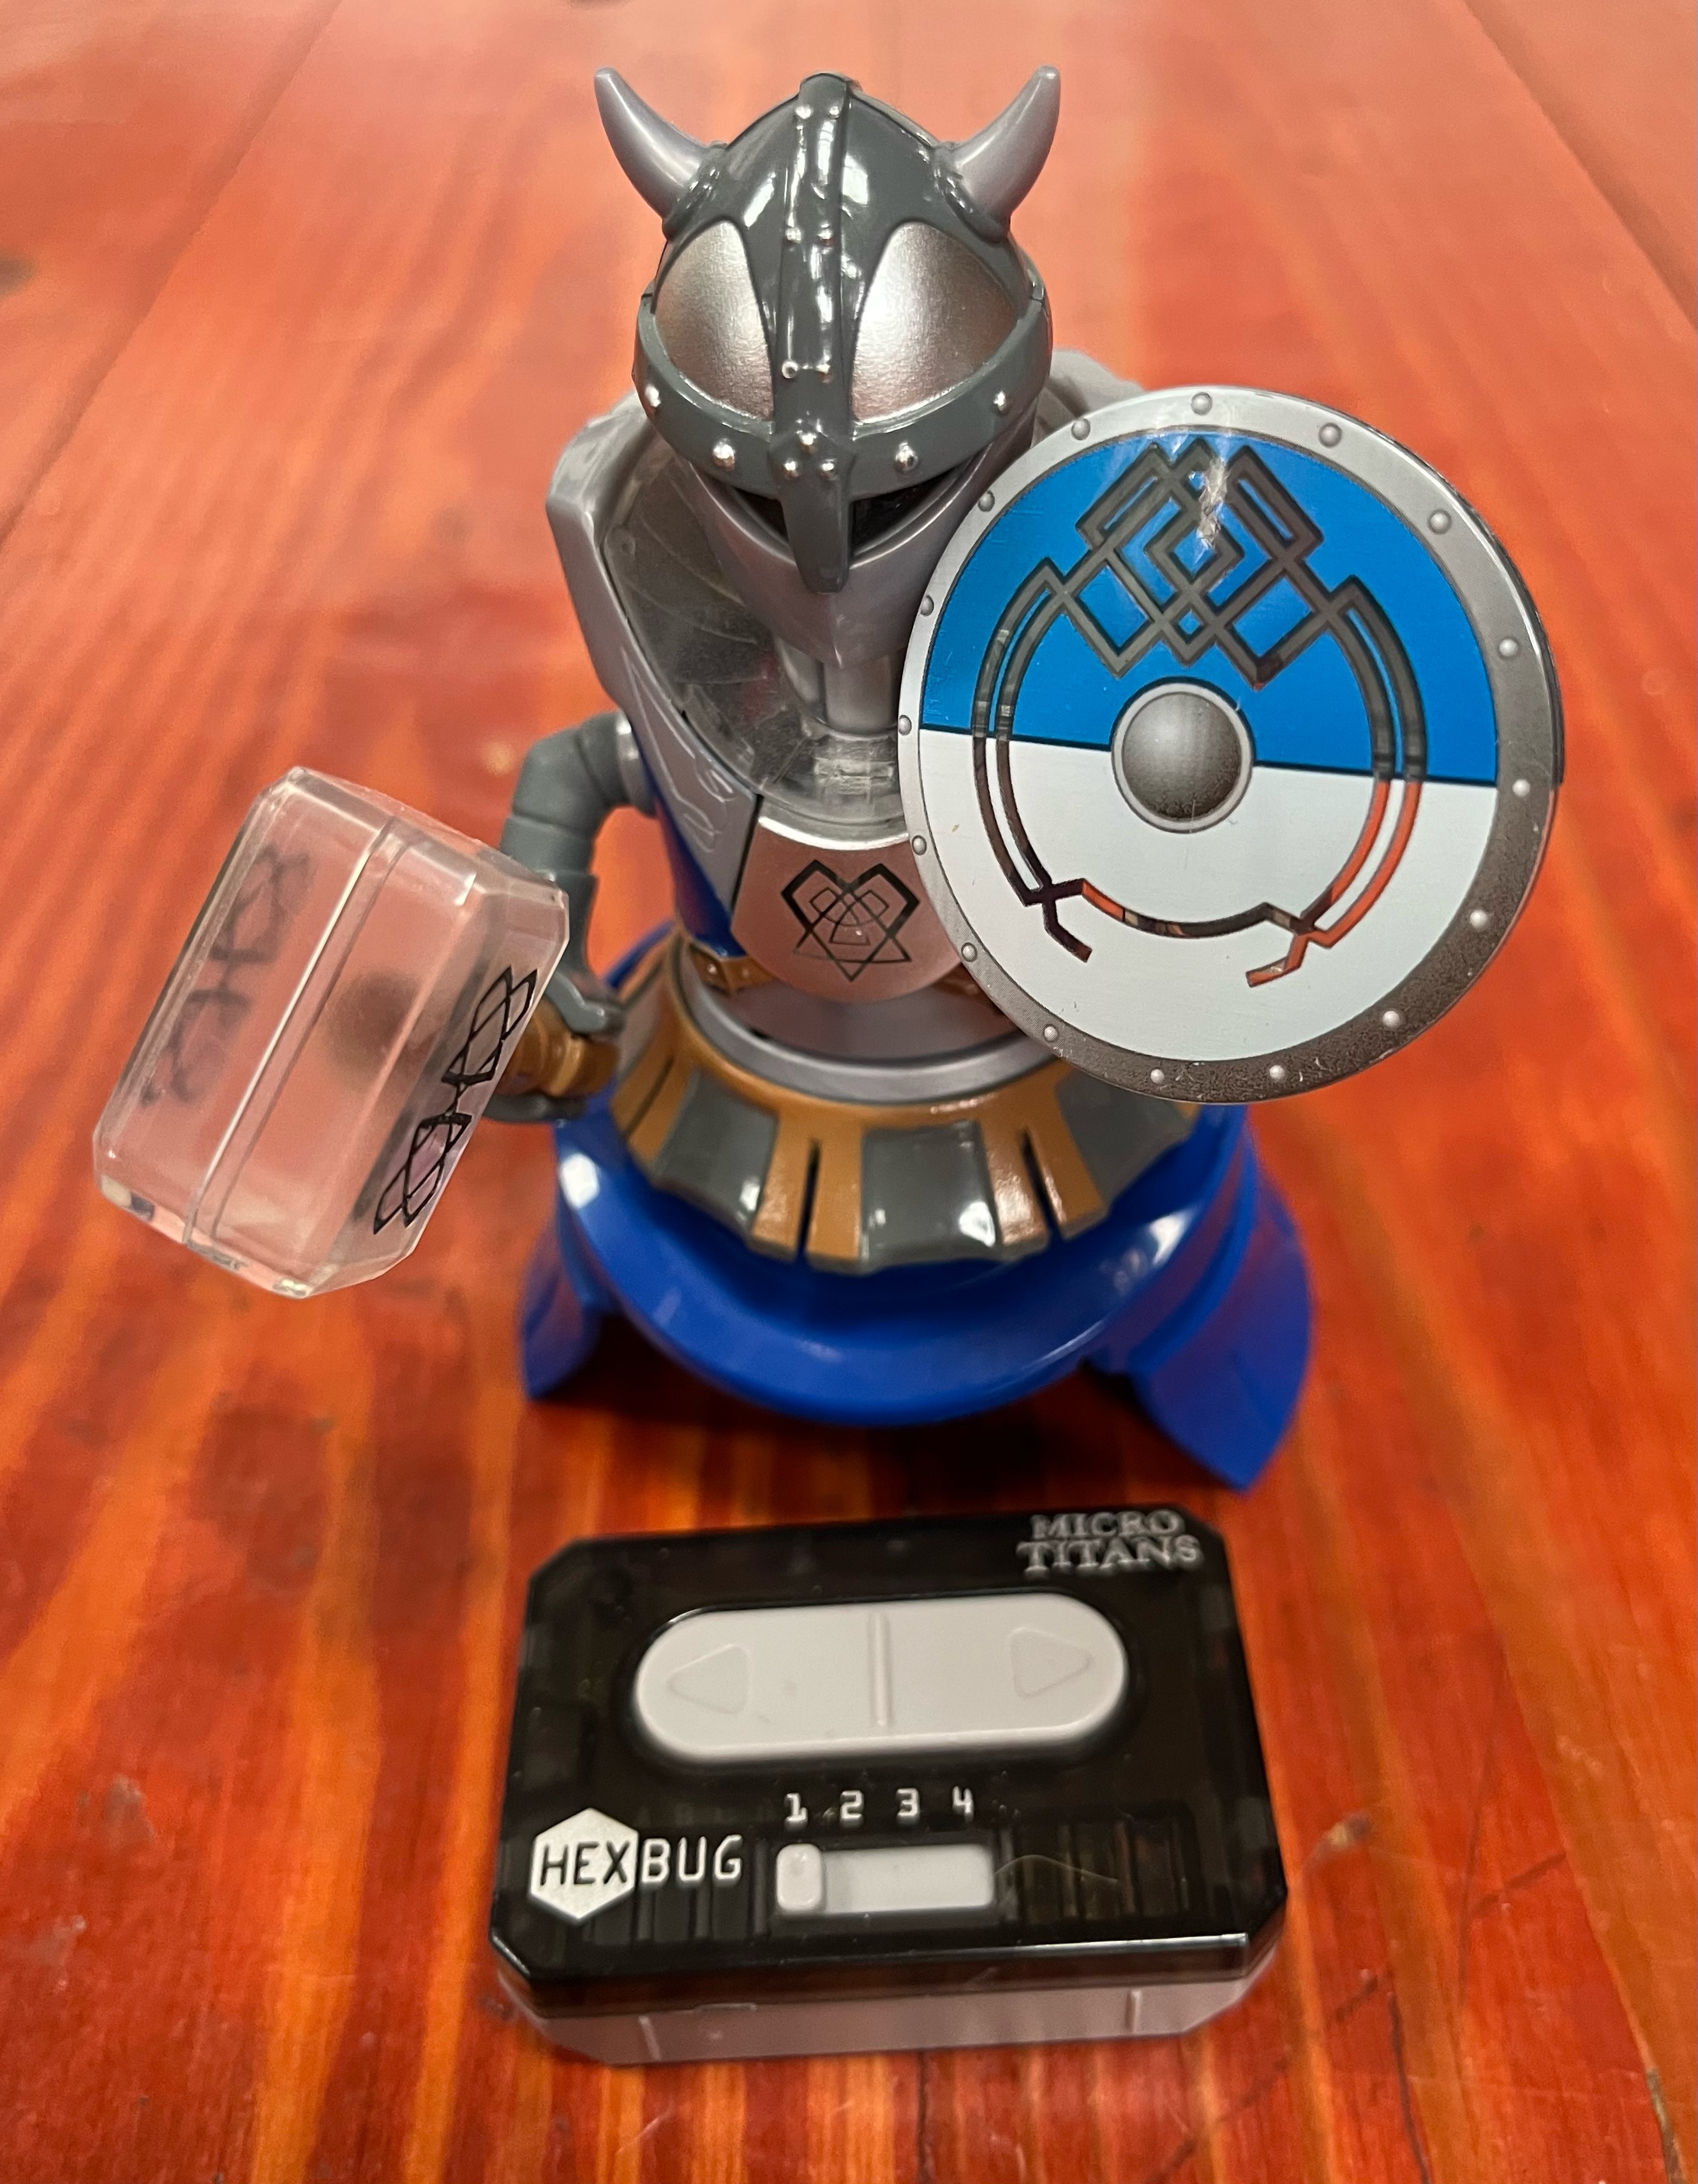 Hexbug Micro Titans blue Viking battle robot with remote control